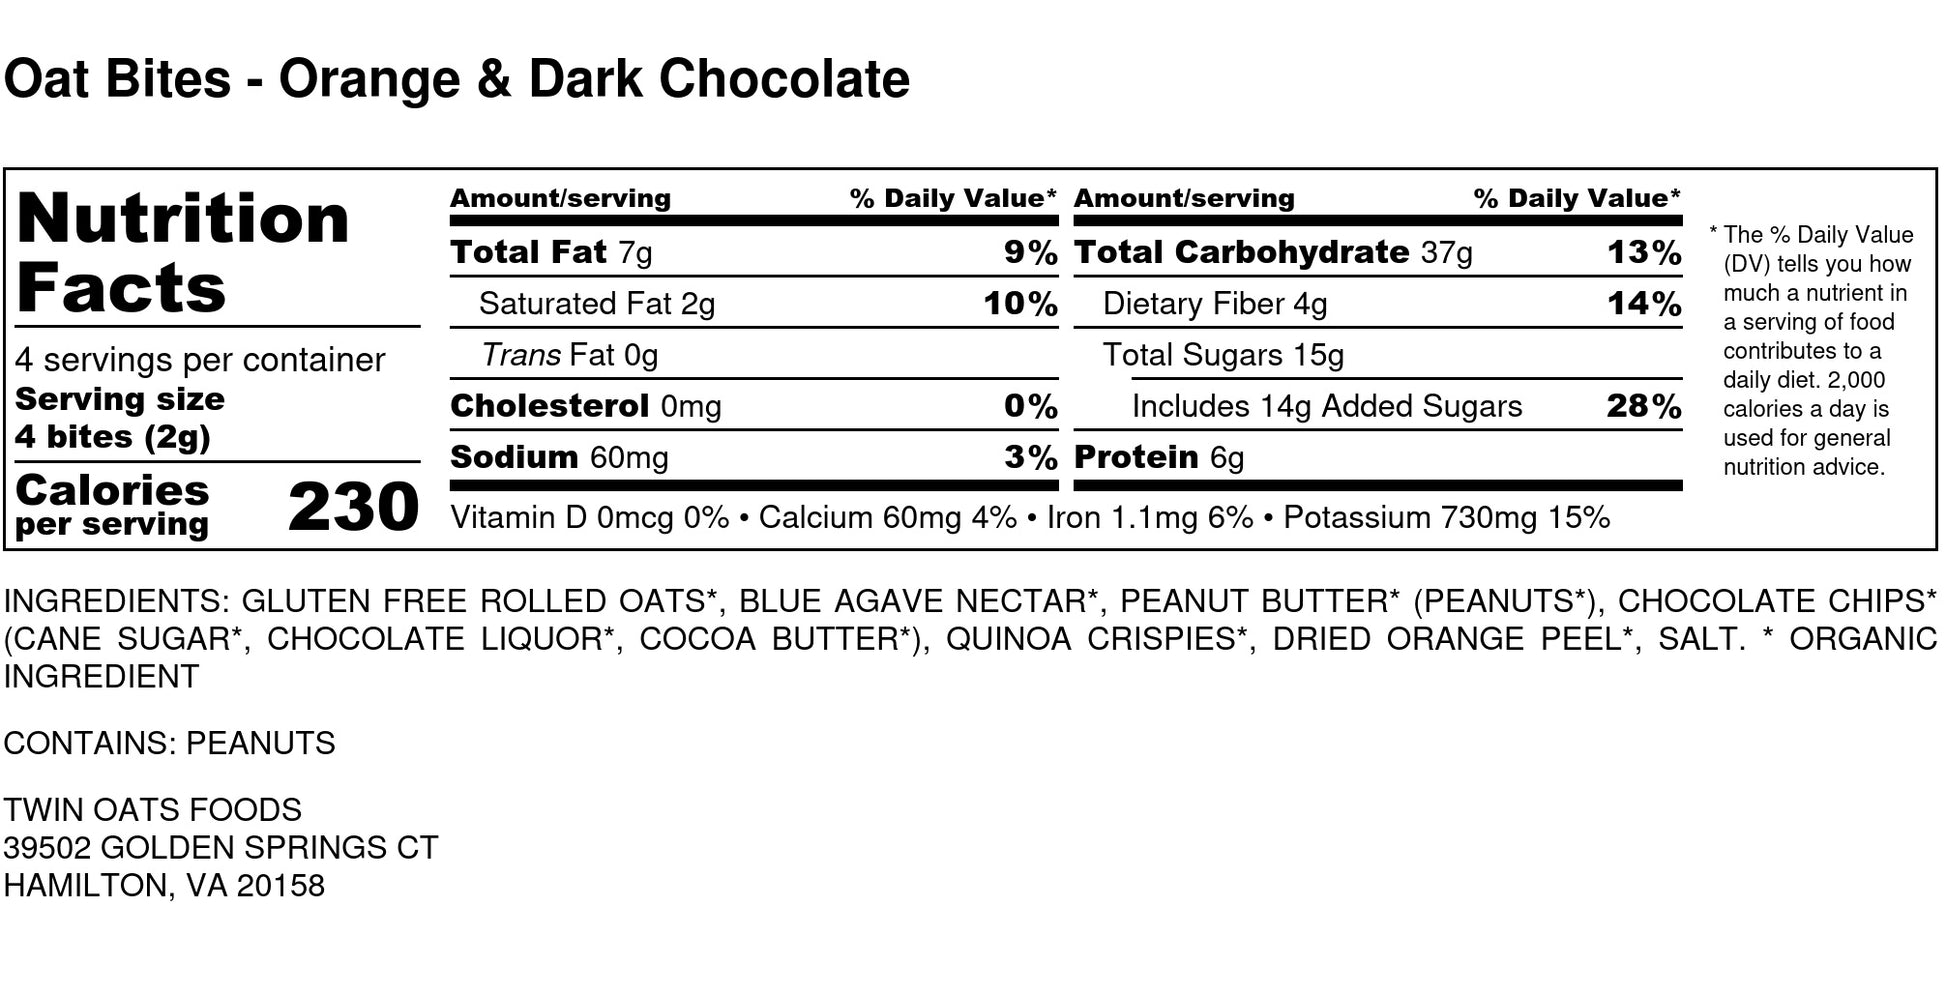 Twin Oats Foods Oat Bites - Orange & Dark Chocolate Nutrition Label